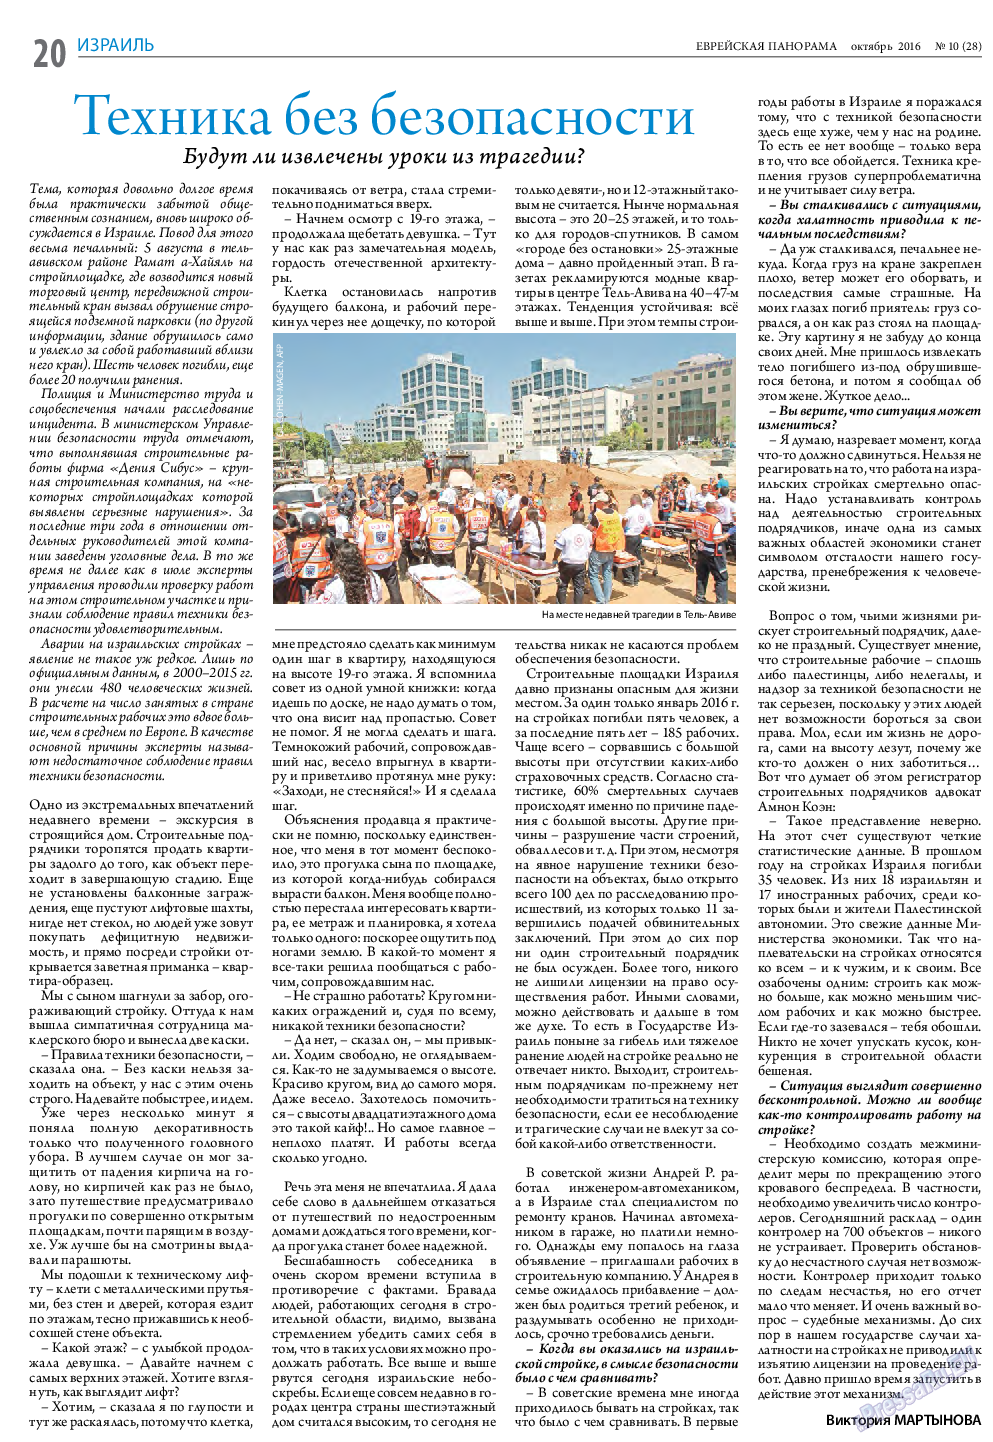 Еврейская панорама, газета. 2016 №10 стр.20